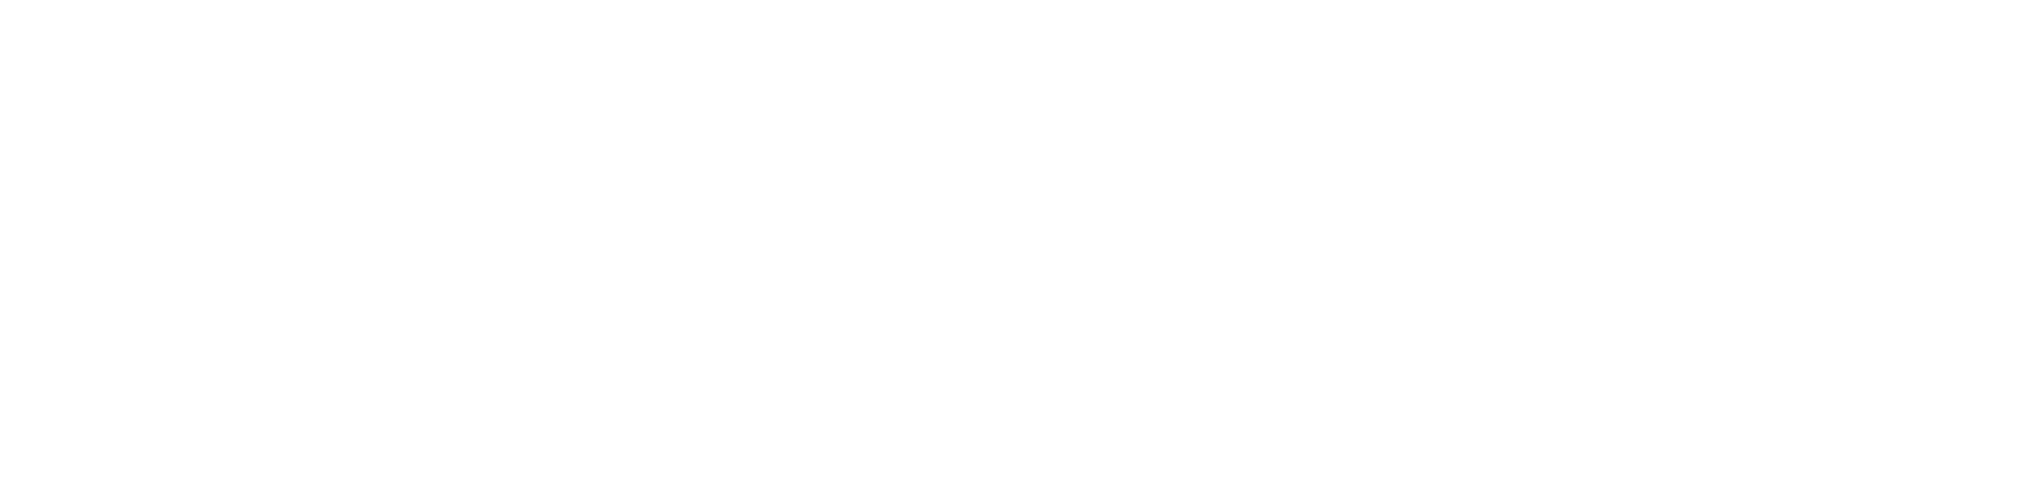 Geojobs.biz - Geospatial Career Portal brought to you by Spatial Media LLC